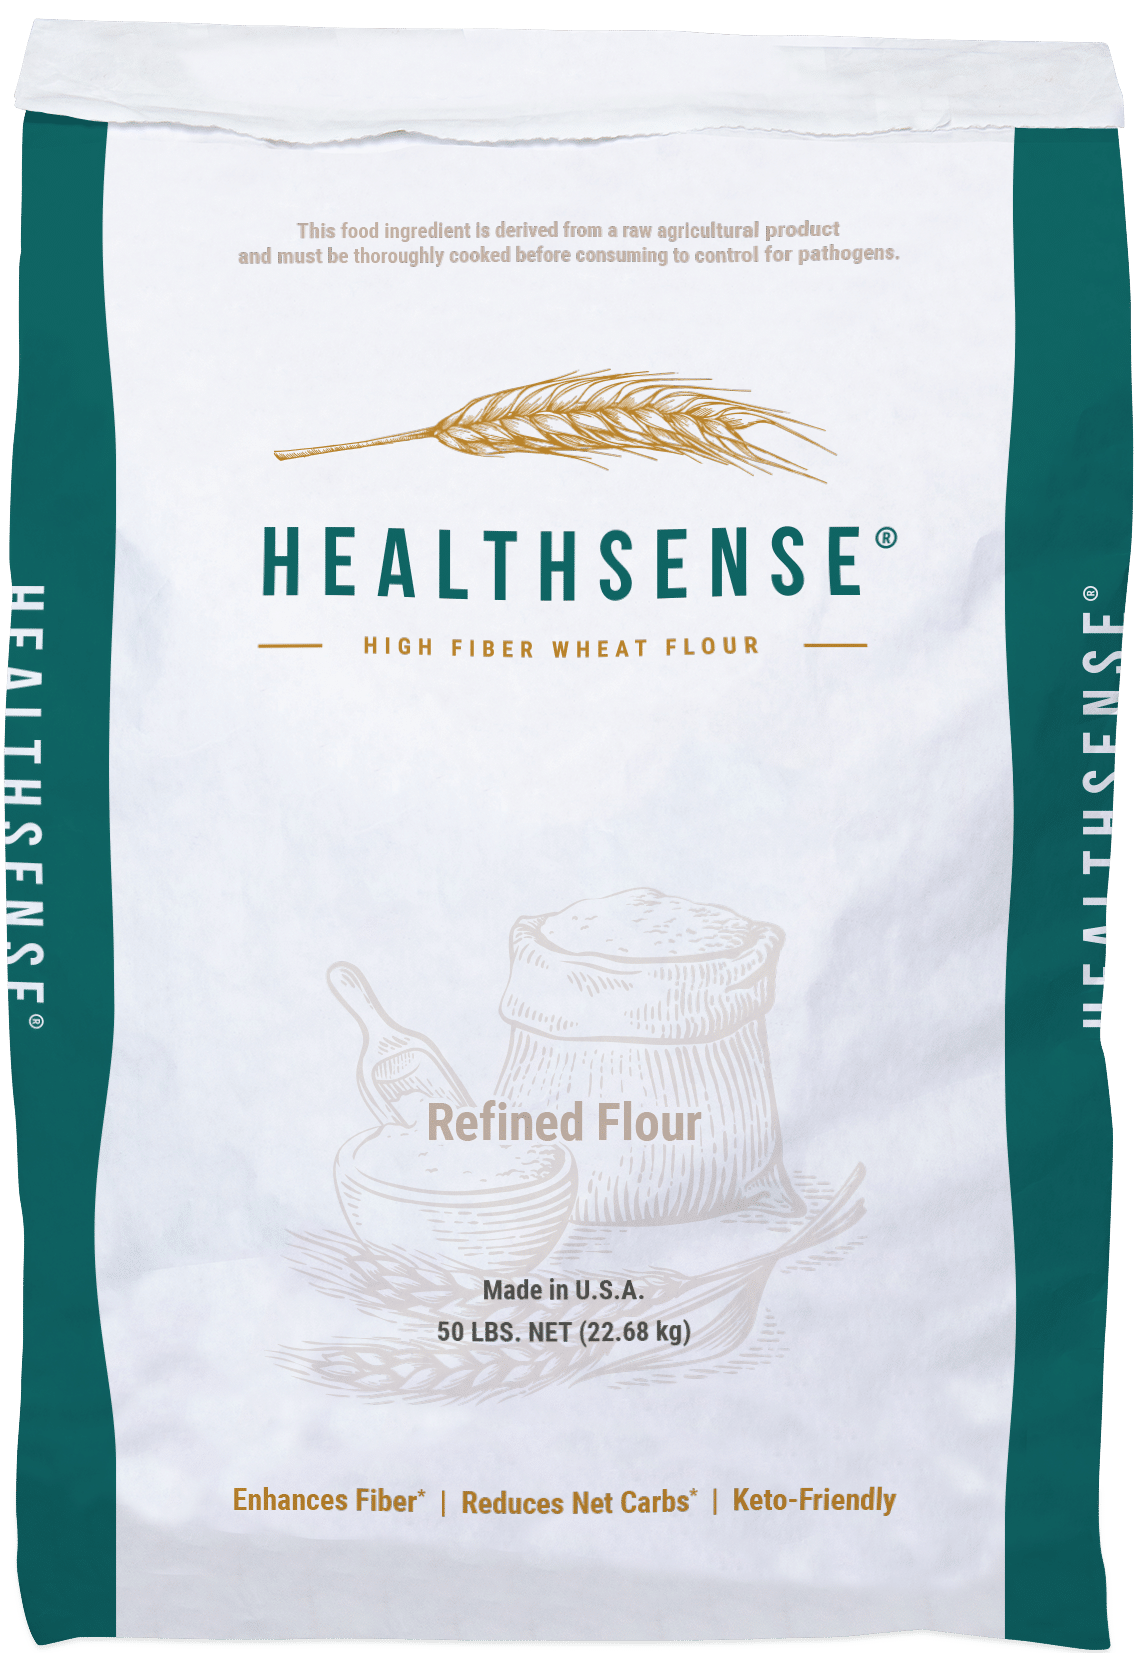 HealthSense ® High Fiber Wheat Flour. Photo Source: Bay State Milling